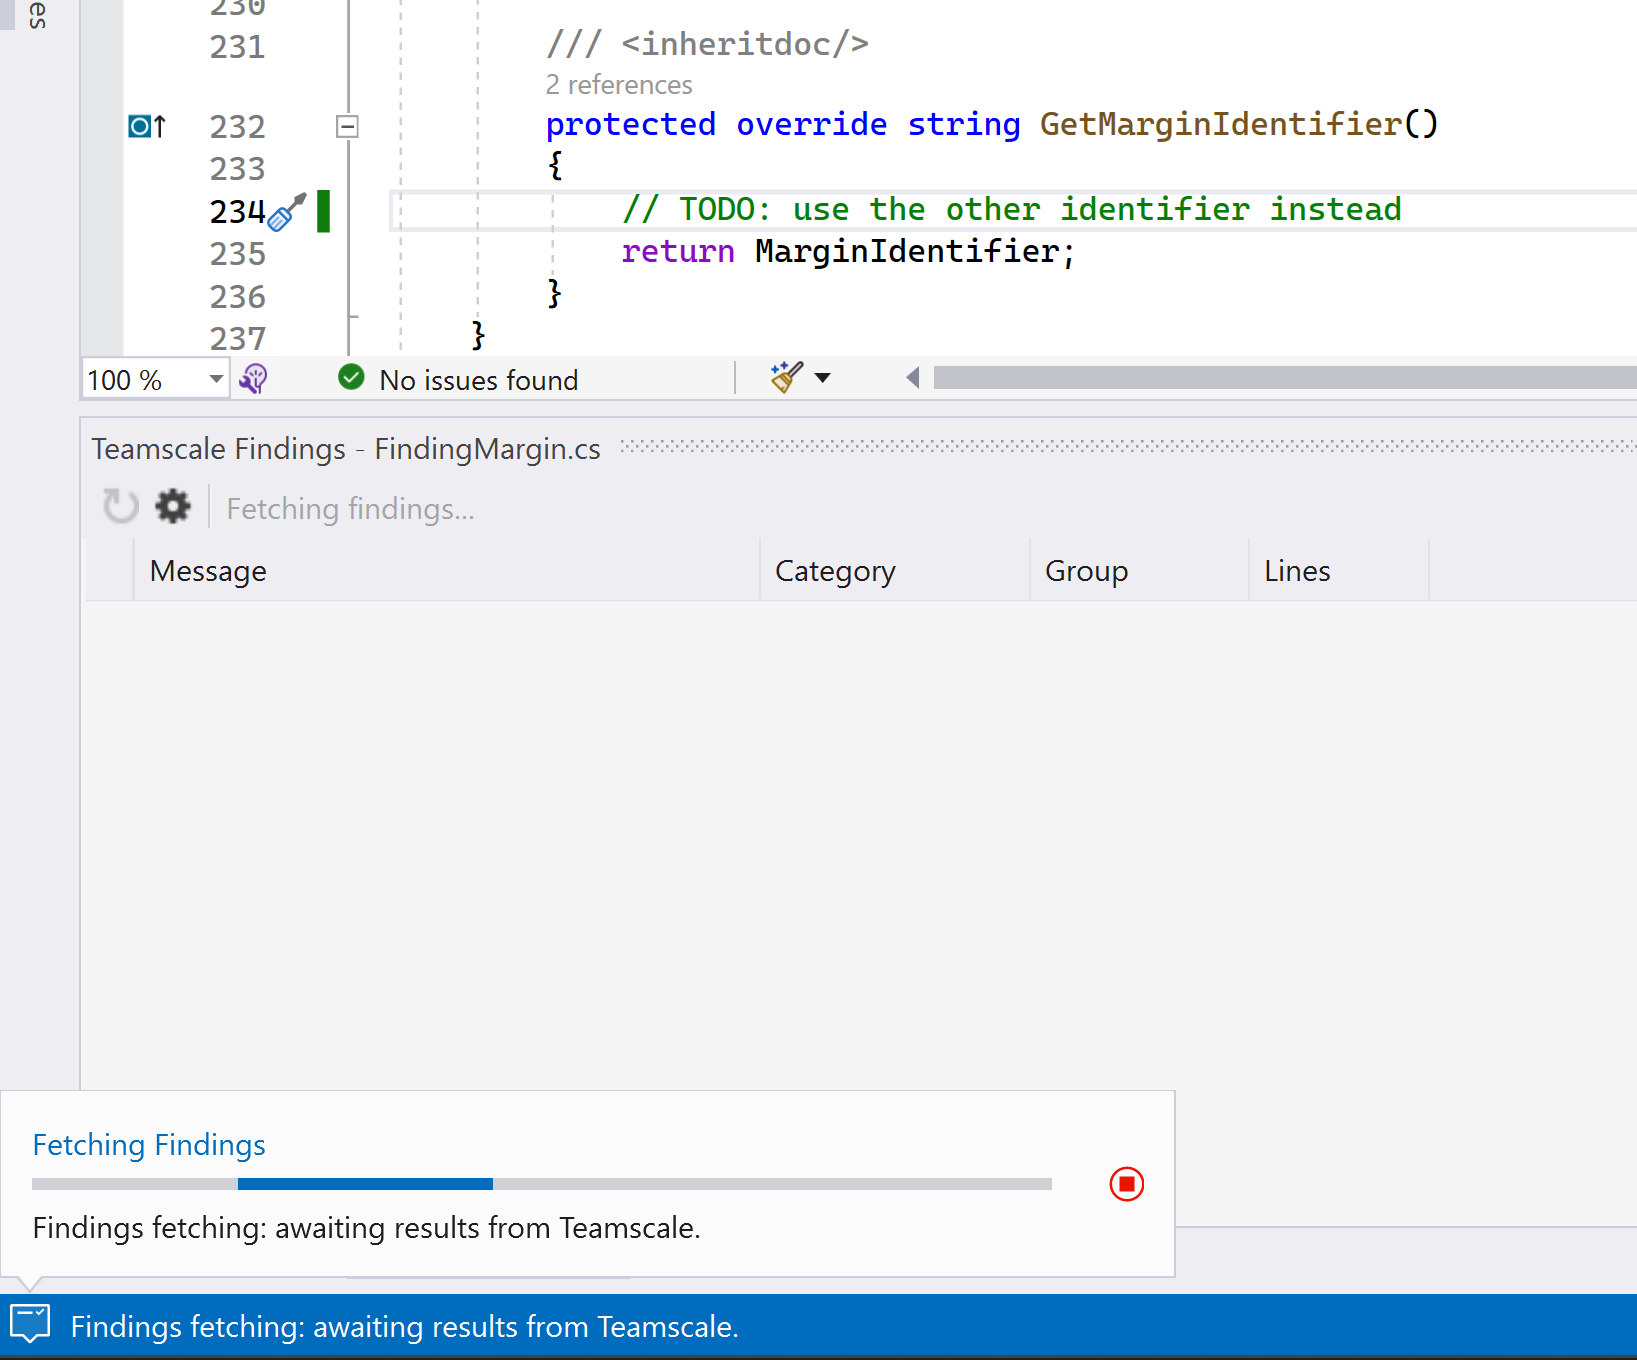 Visual Studio Findings View